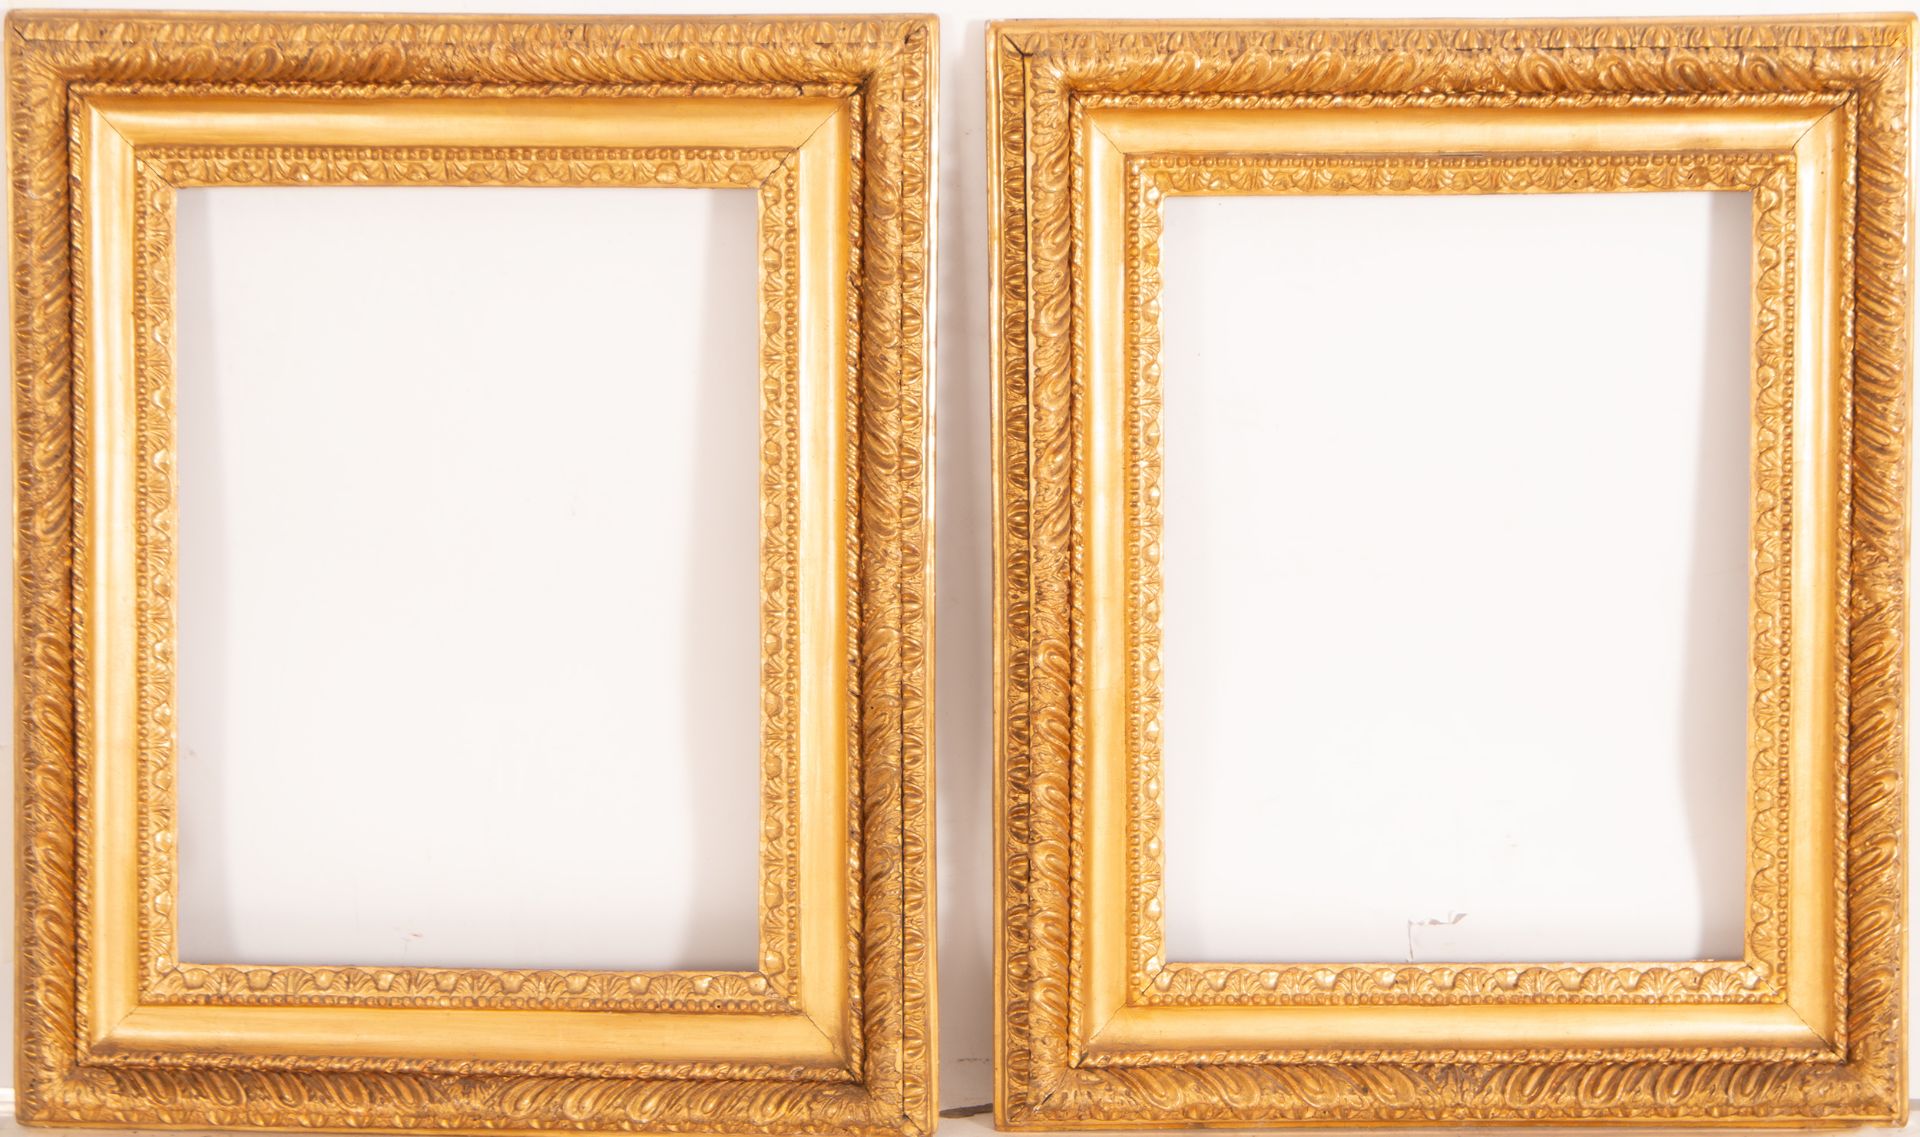 Pair of Italian Gilt Frames, 17th century